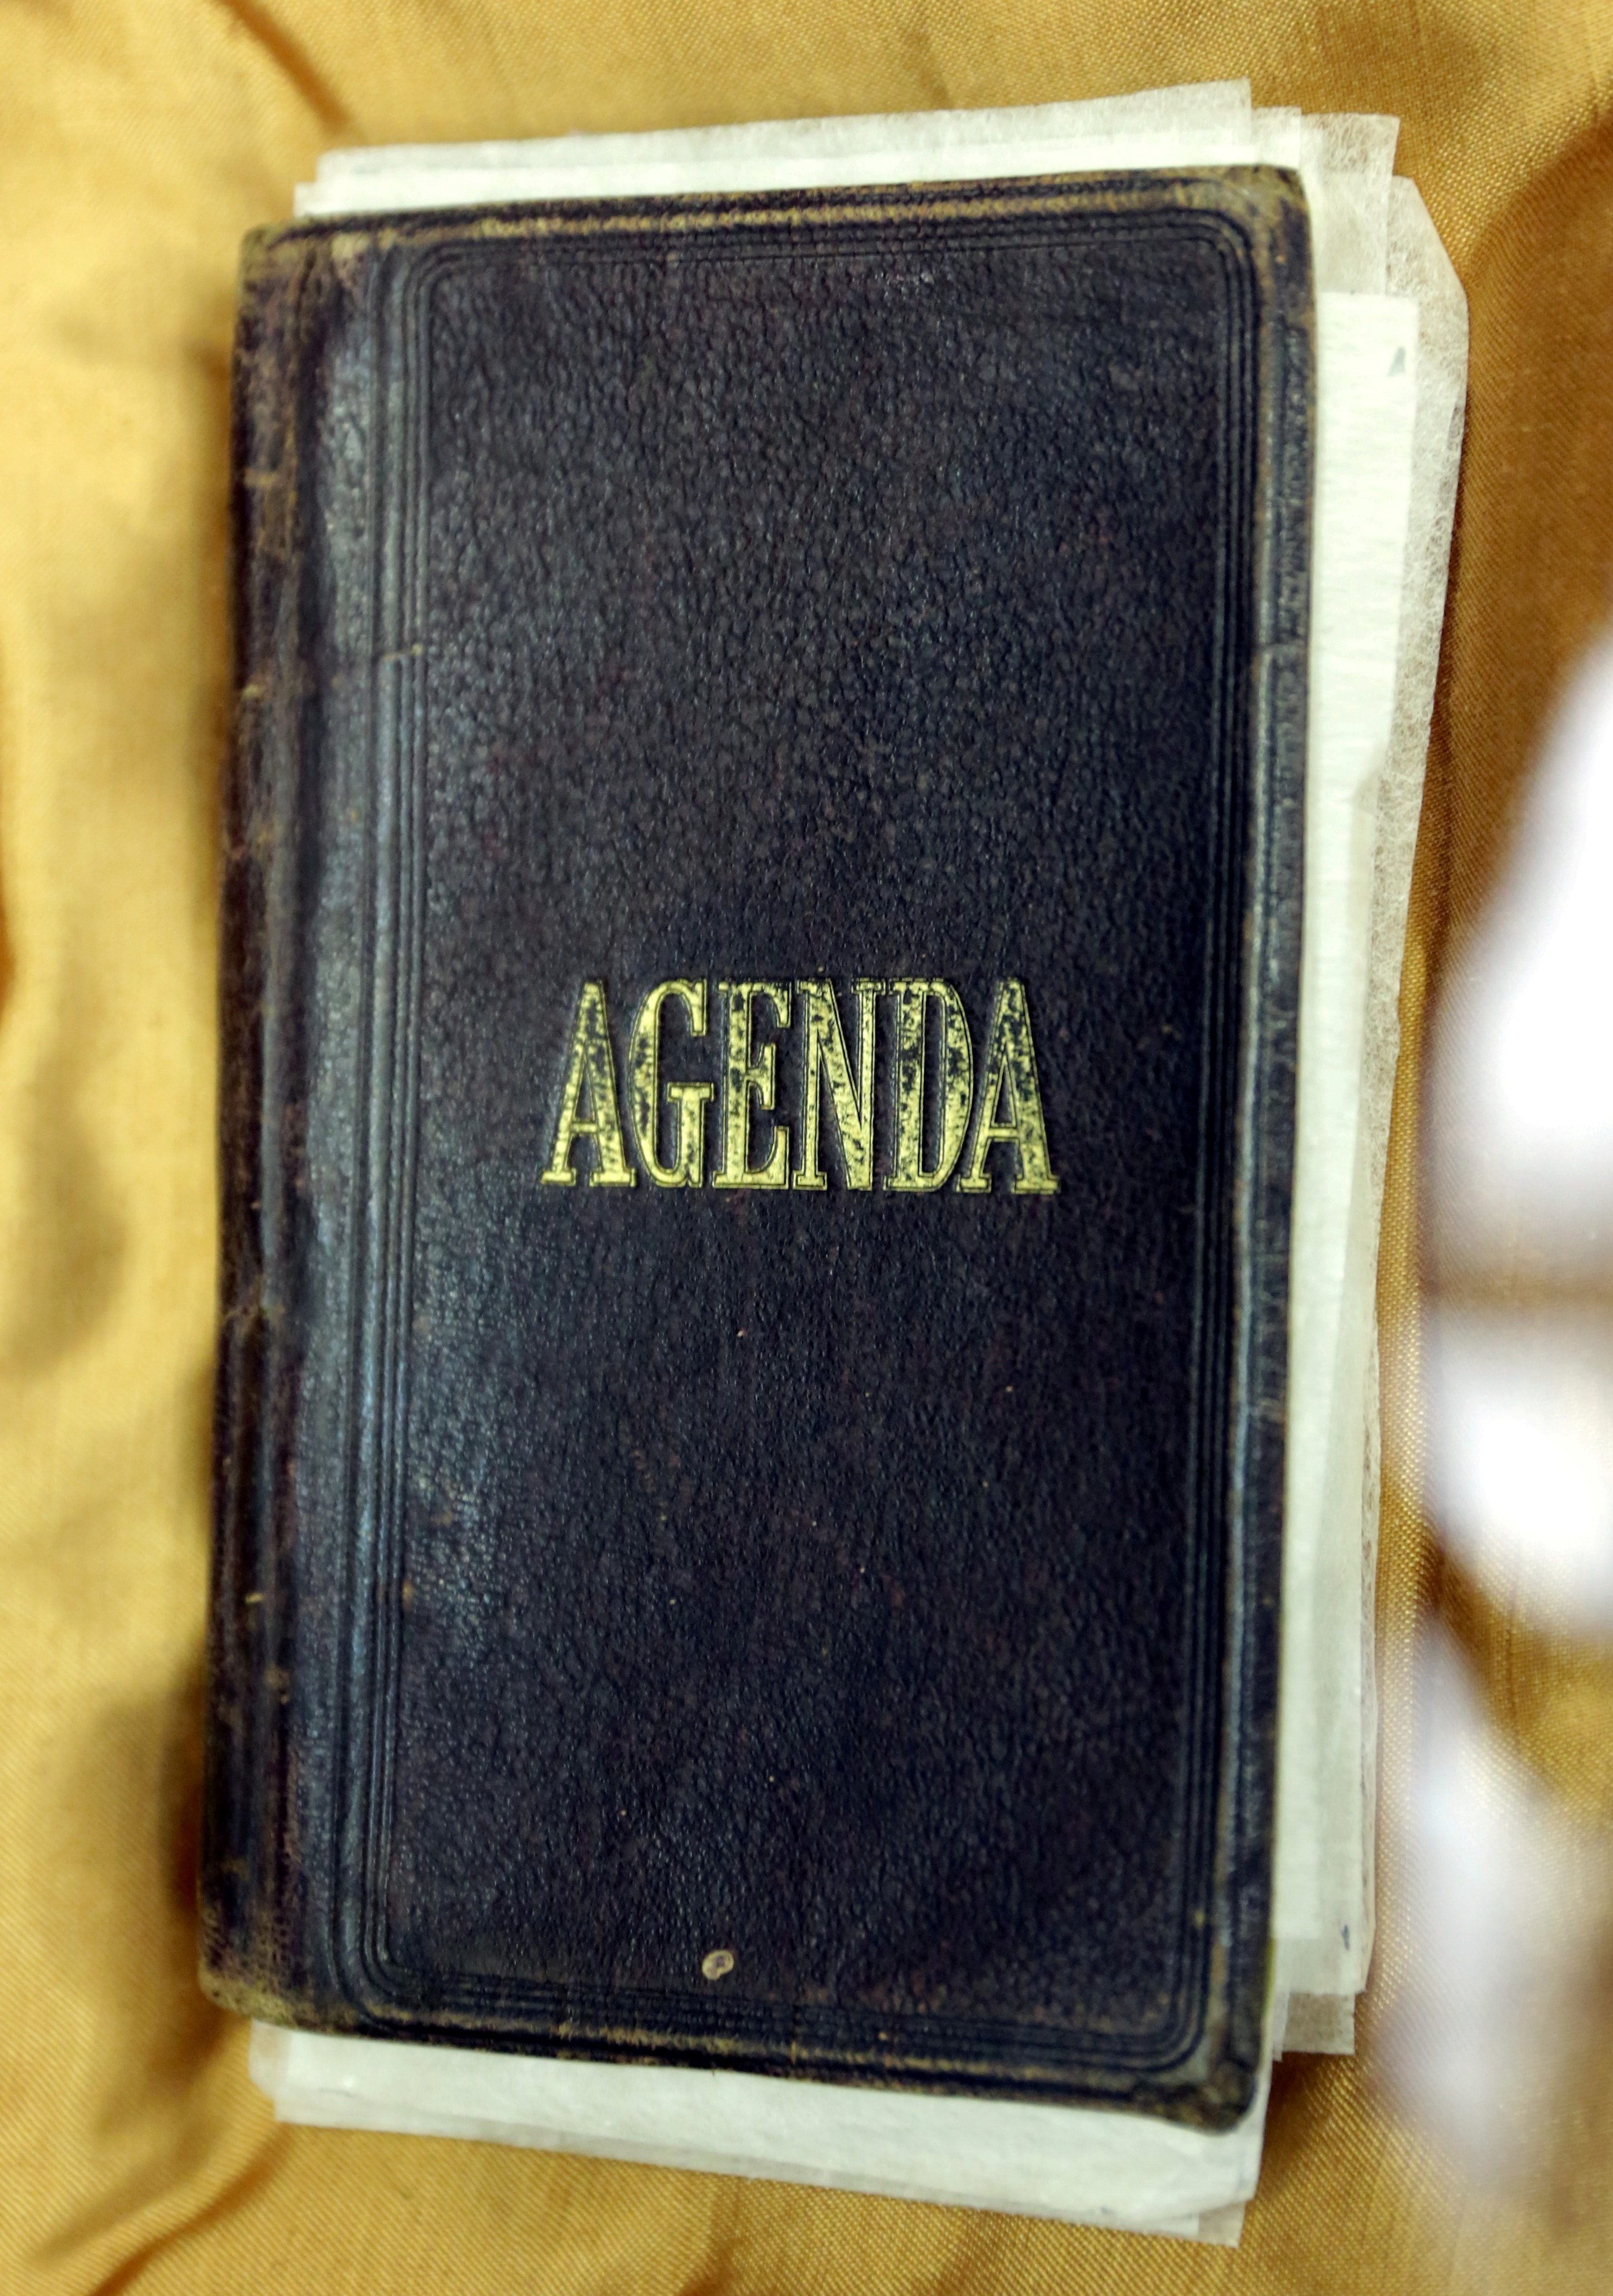 Тефтерчето на Левски е с коричен надпис ”Agenda” на латински /в превод ”дневен ред”-бел.ред./